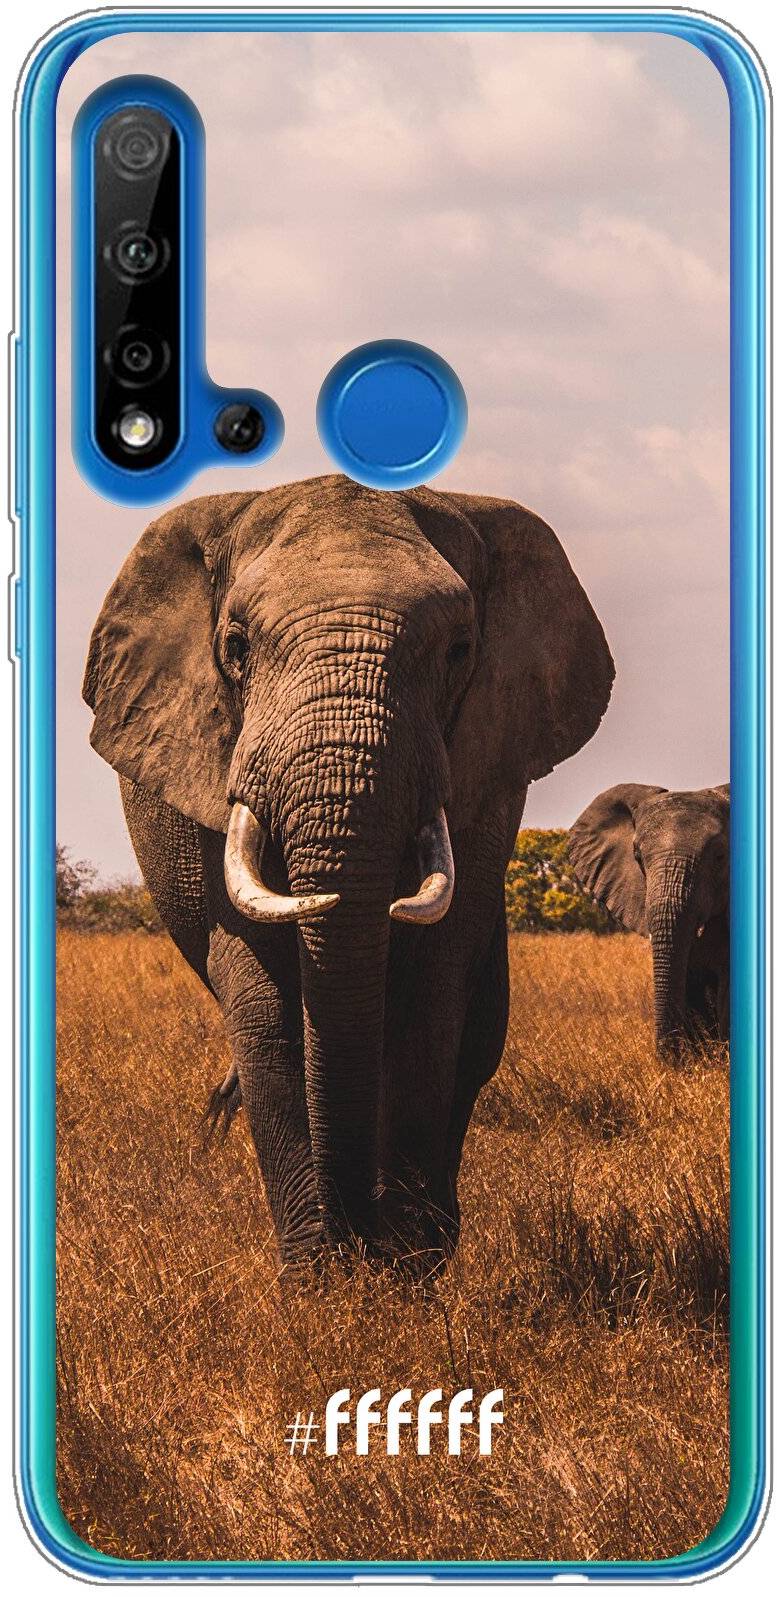 Elephants P20 Lite (2019)